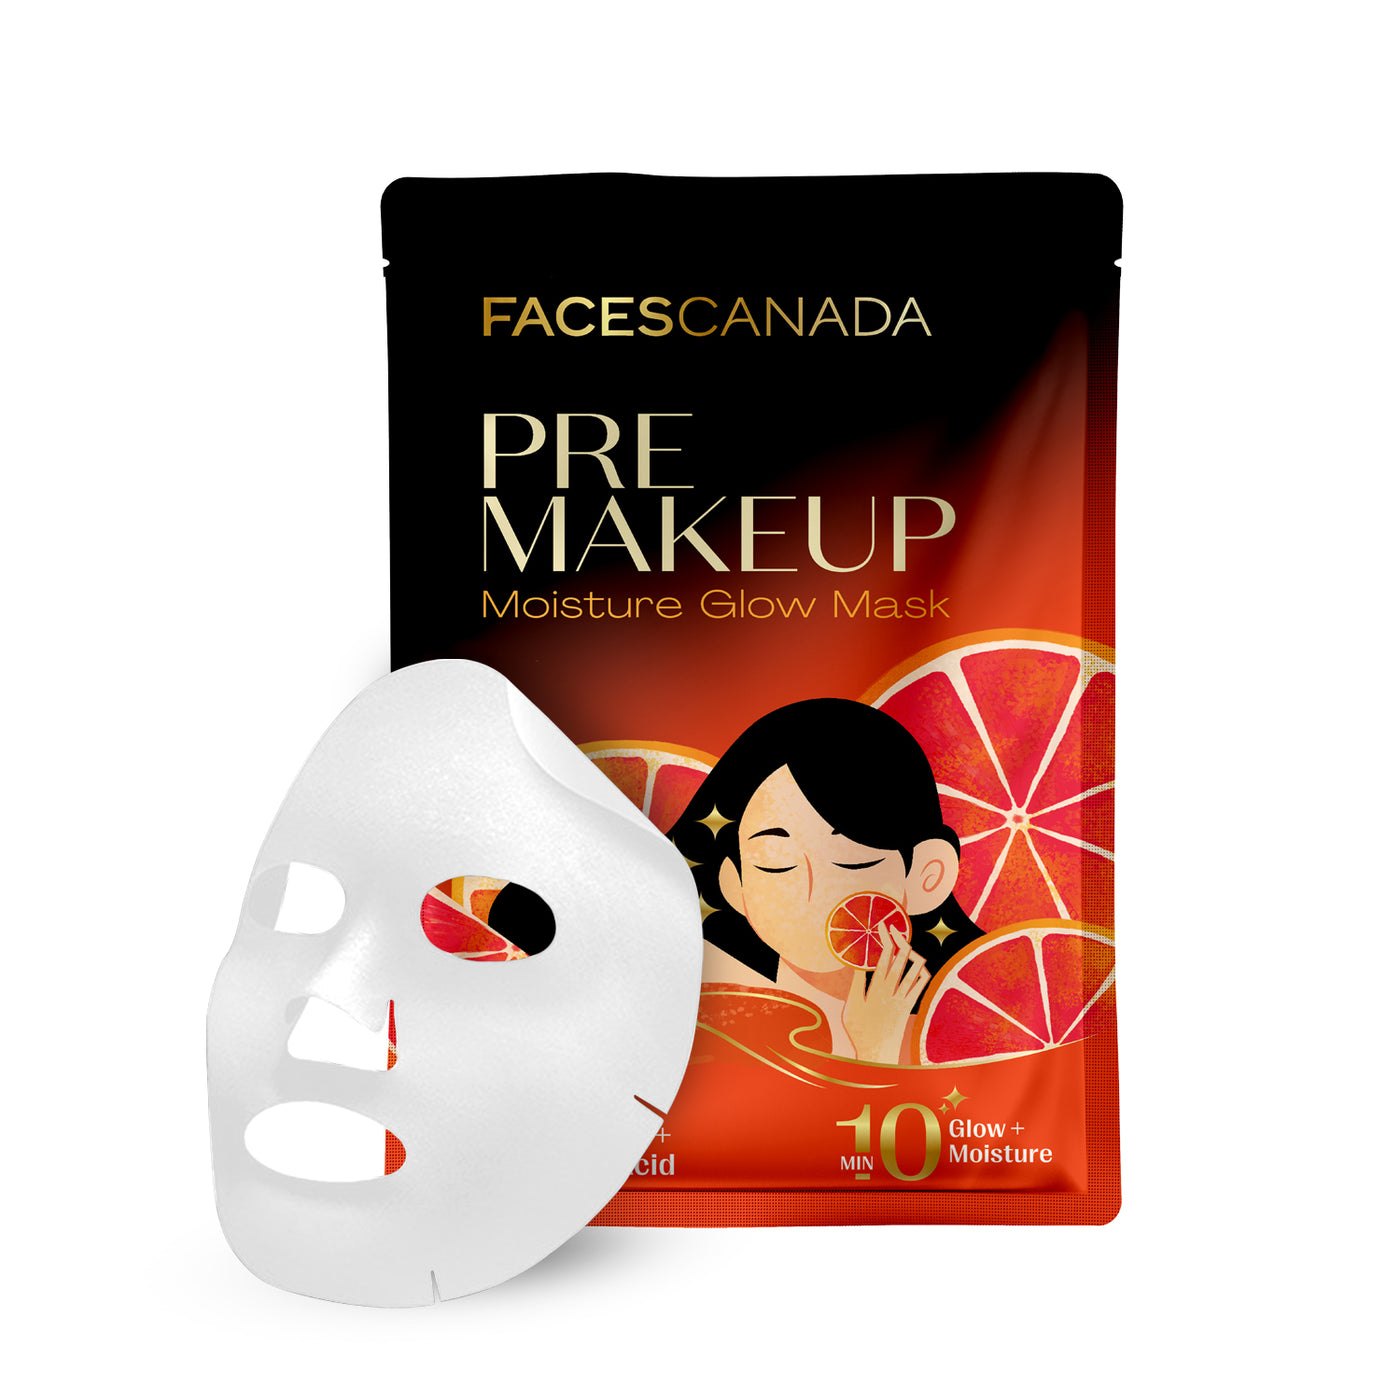 Pre-Makeup Moisture Glow Mask